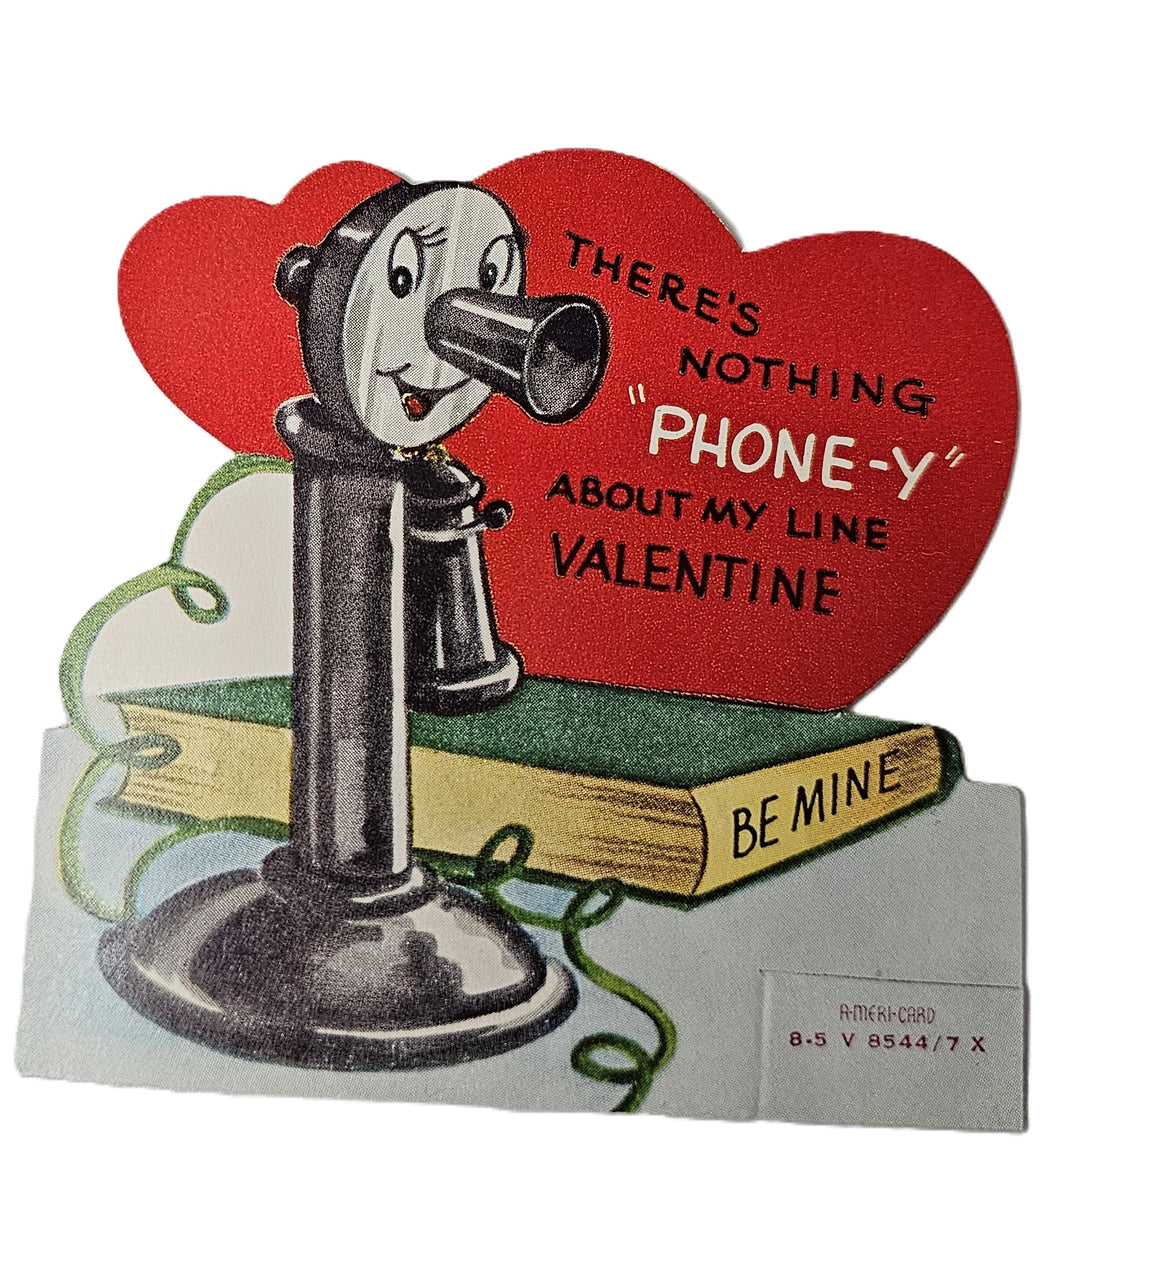 Vintage 1950s Valentine Card Anthropomorphic Candlestick Telephone